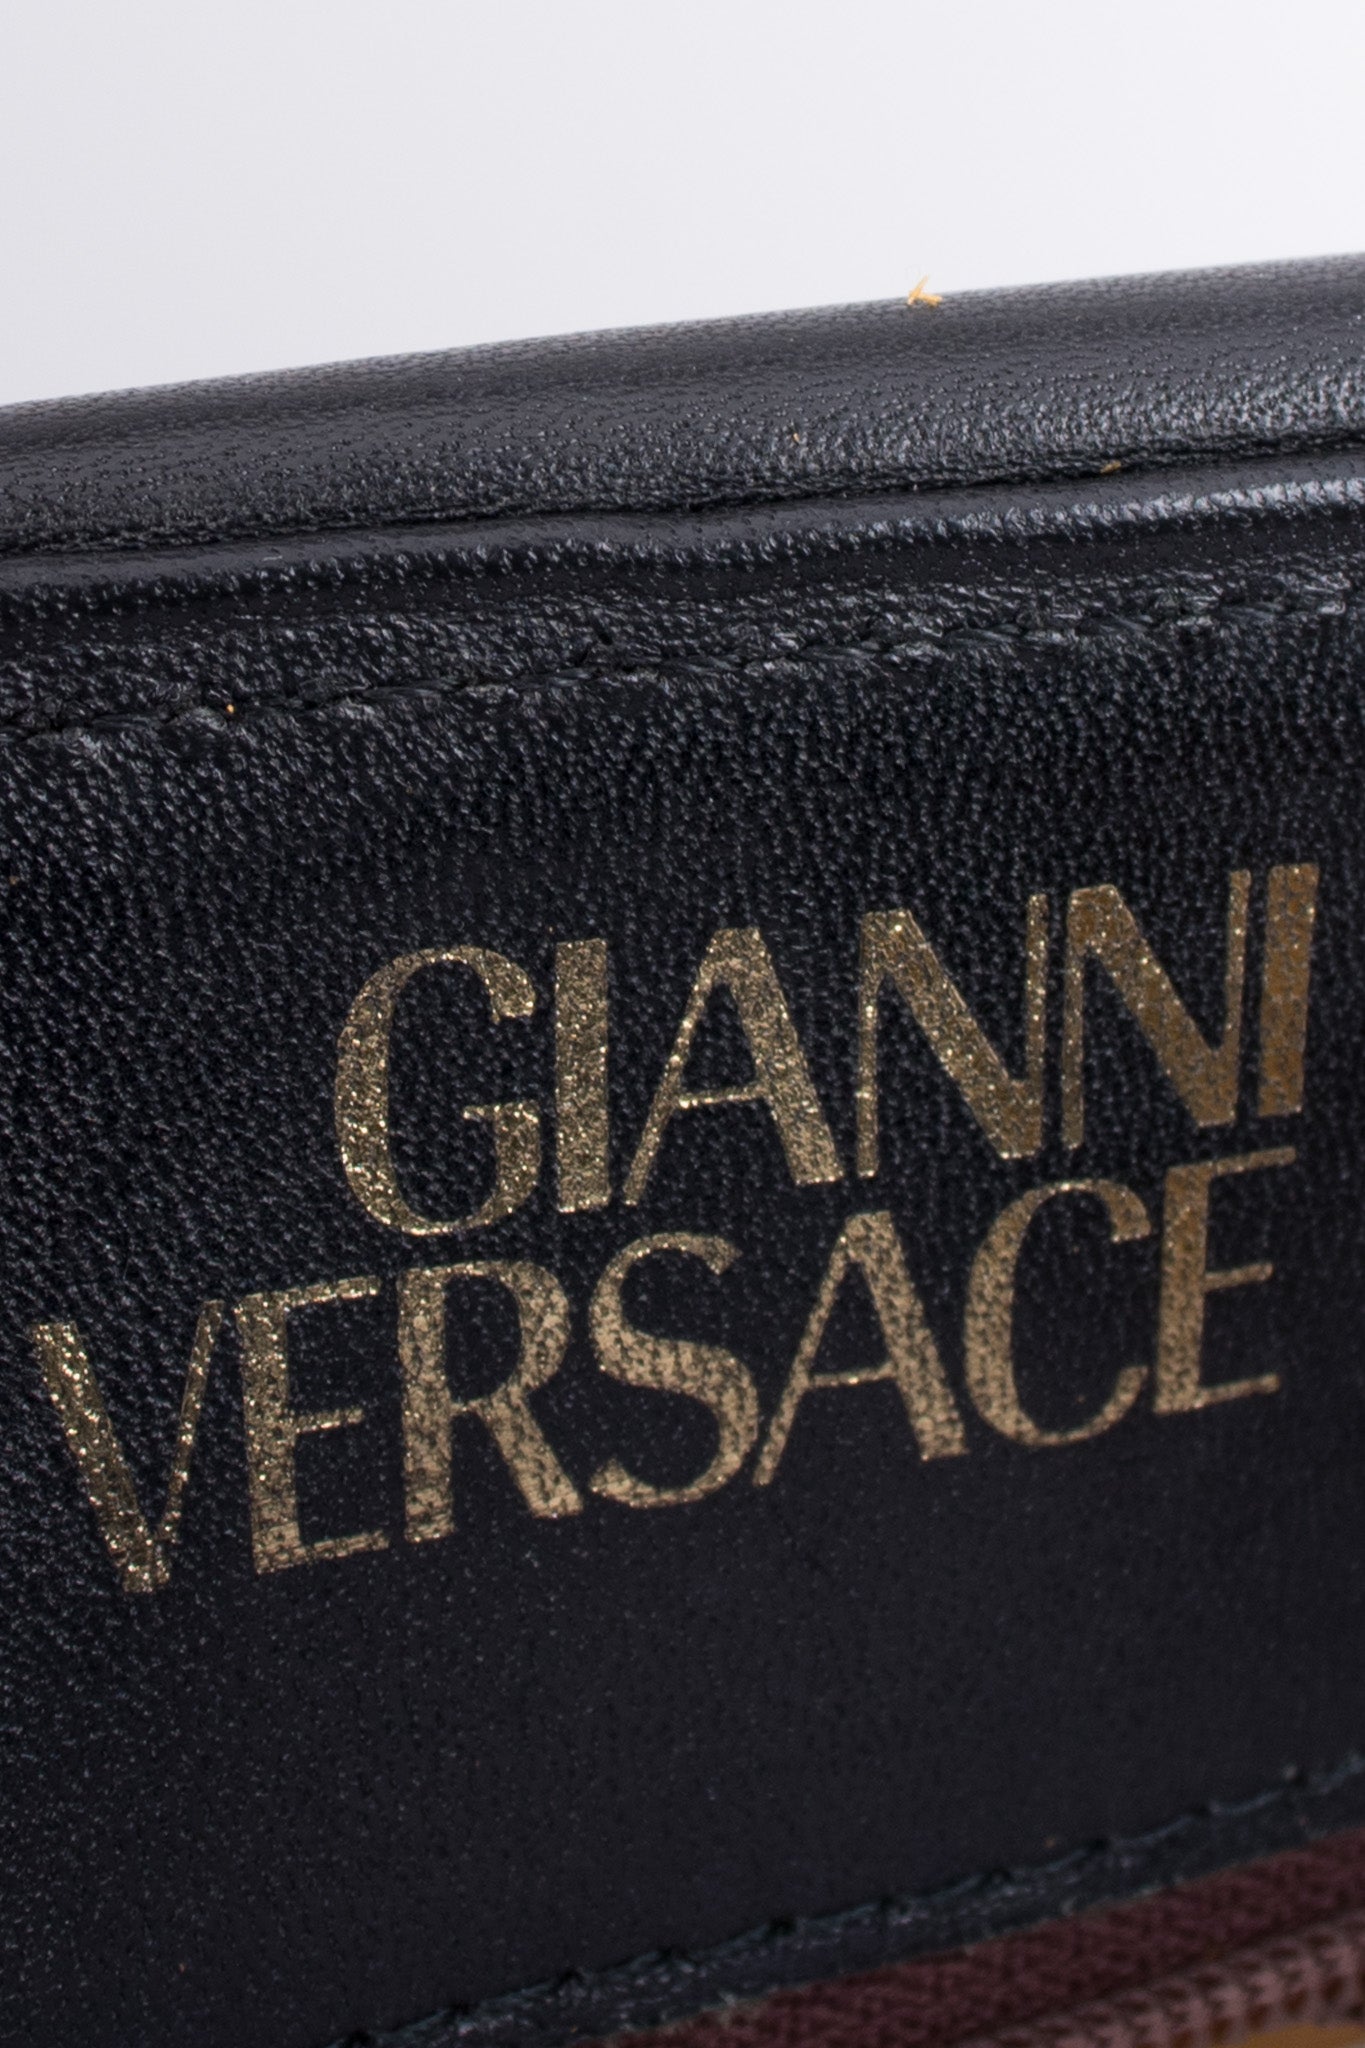 Gianni Versace Baroque Wild Flower Leopard Print Leather PVC Doctor Bag